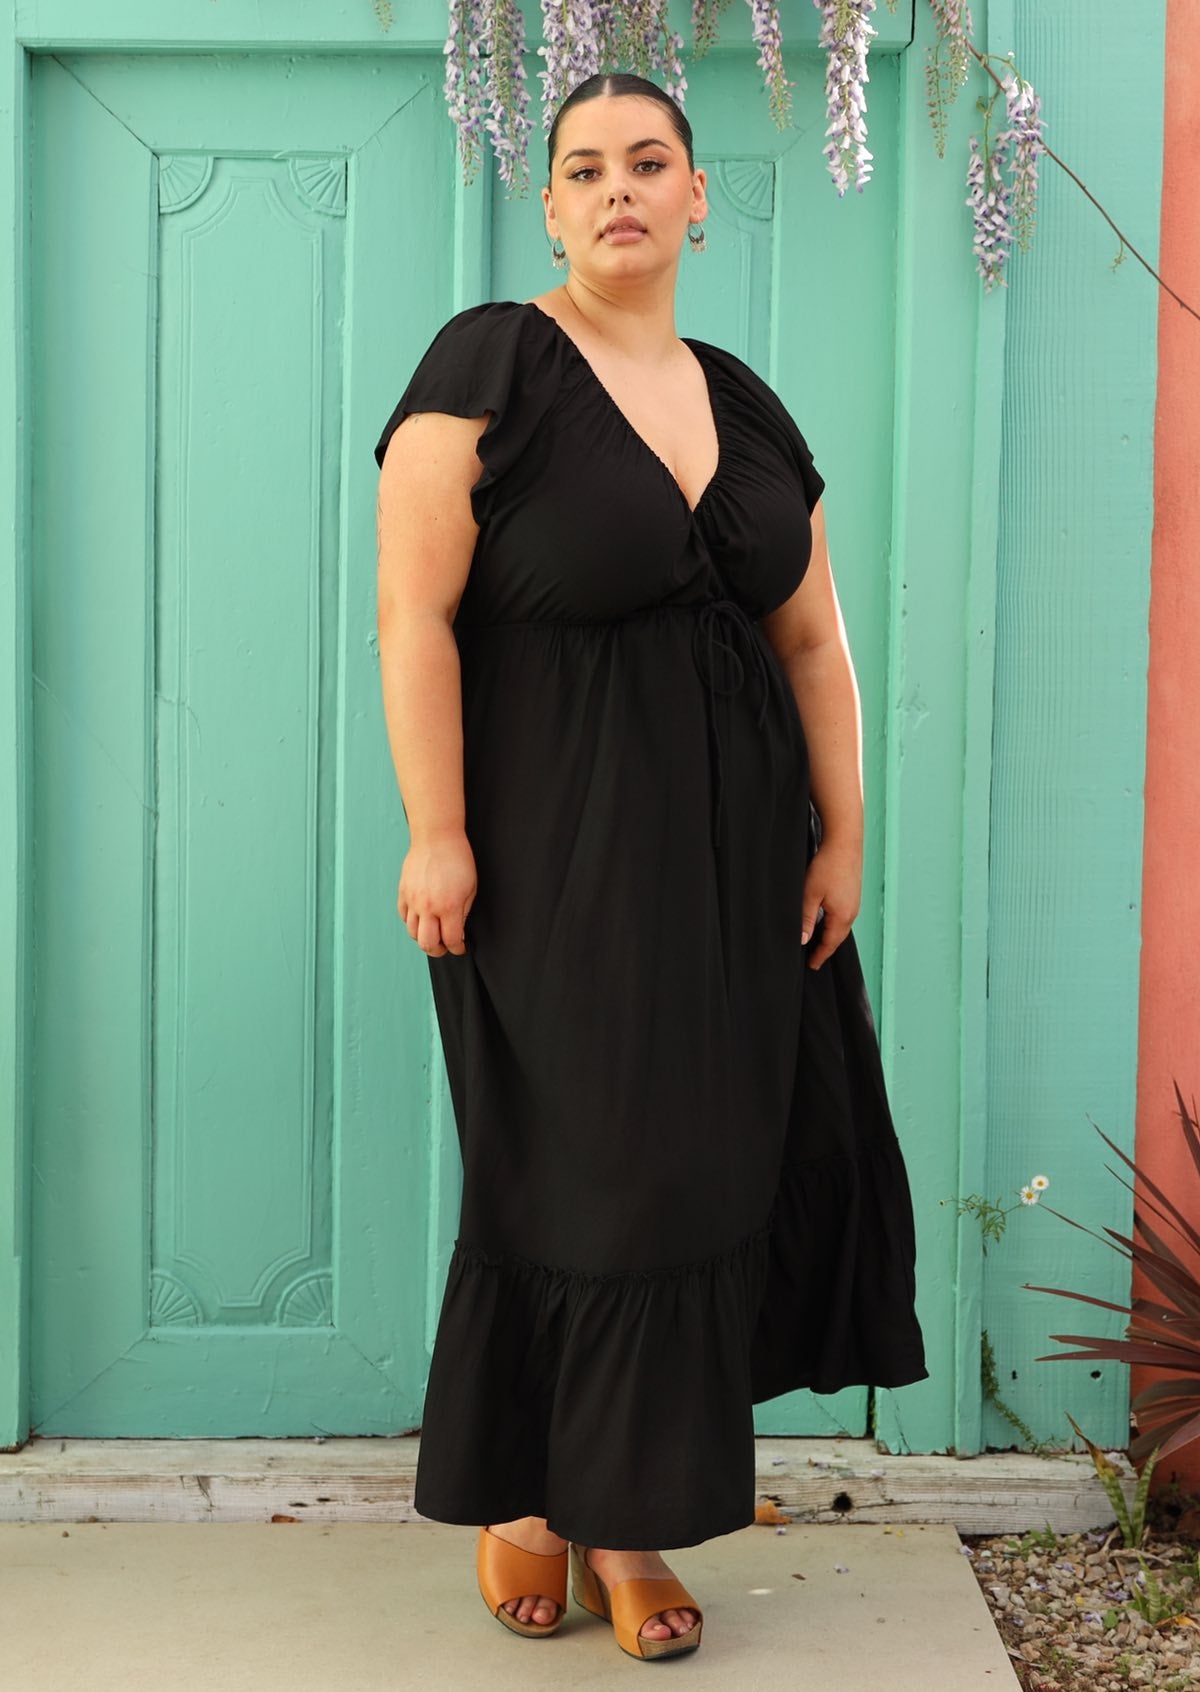 plus sized woman wearing black maxi dress